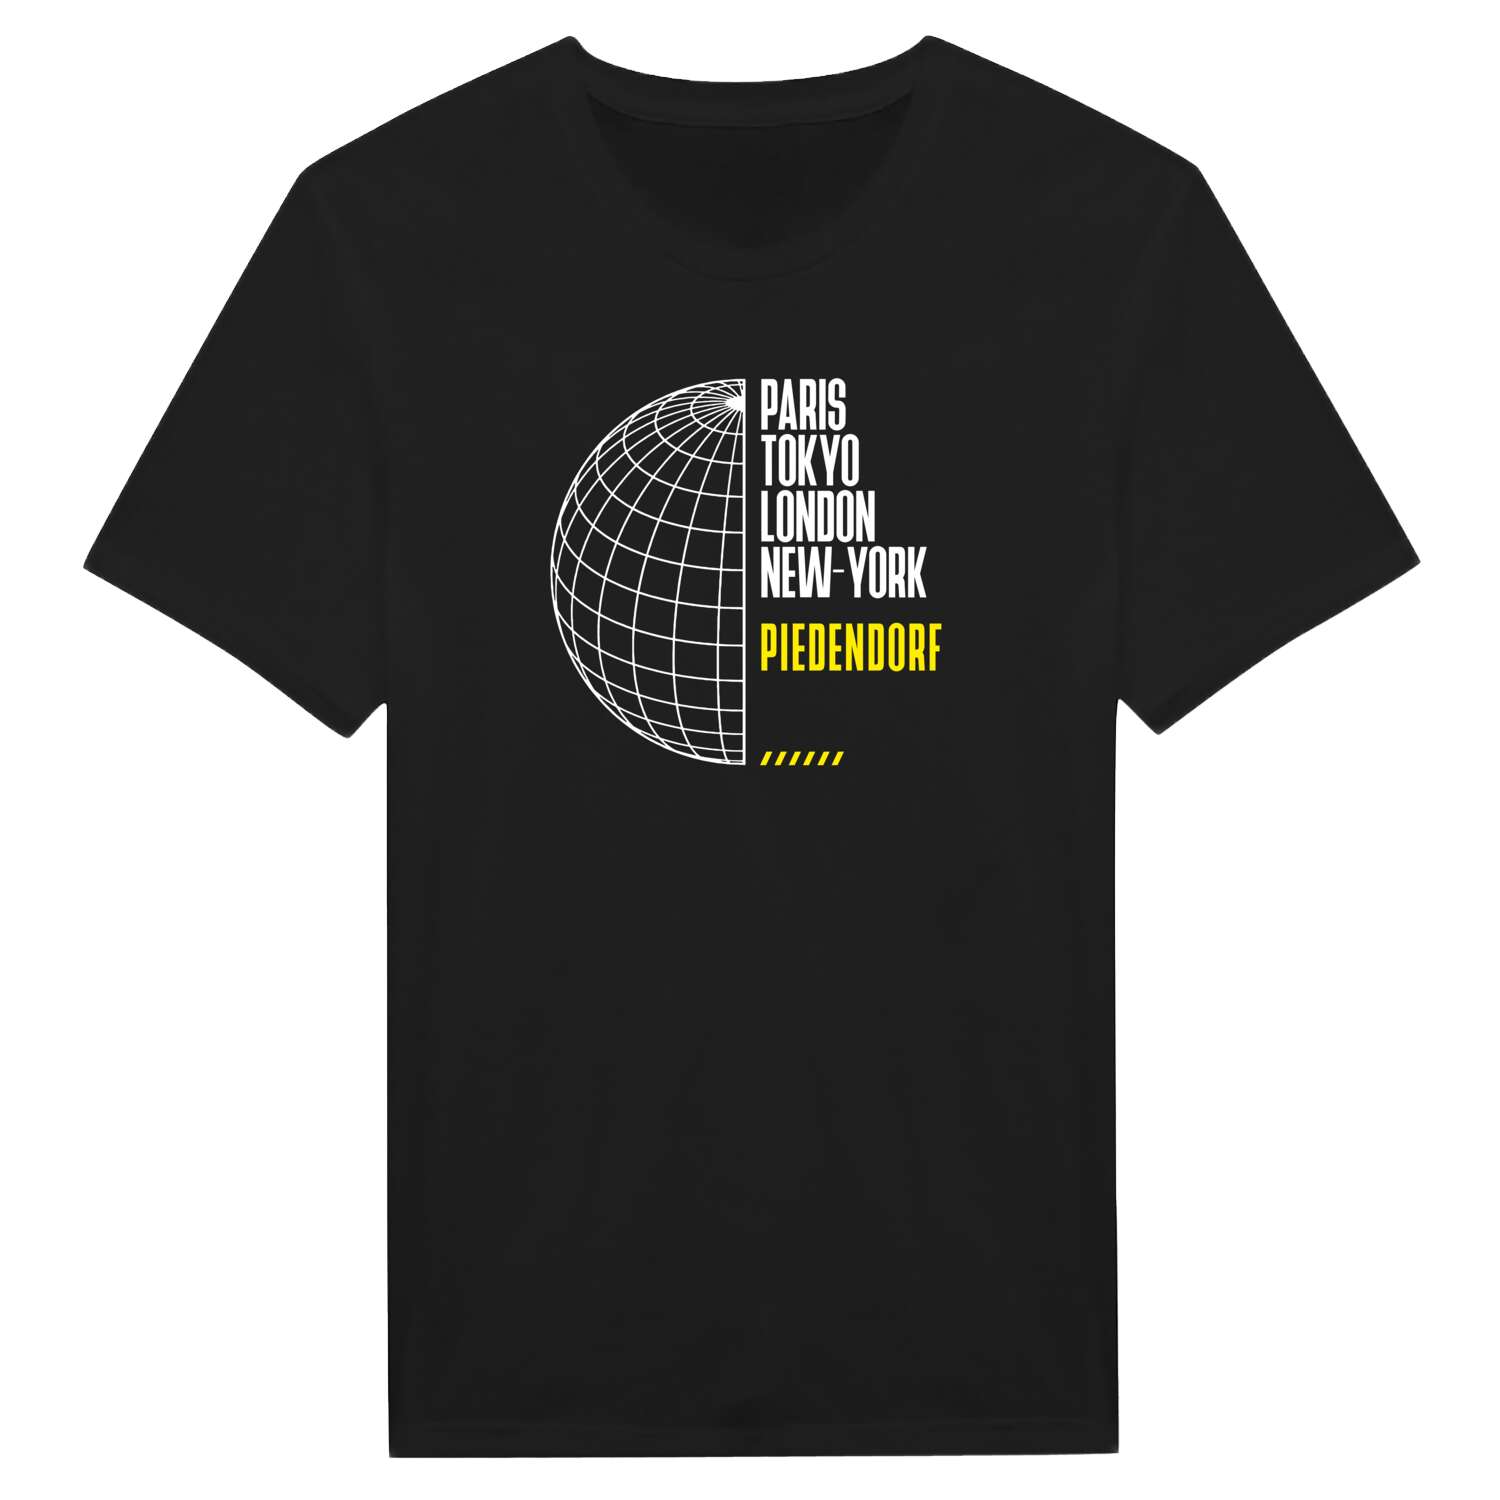 Piedendorf T-Shirt »Paris Tokyo London«